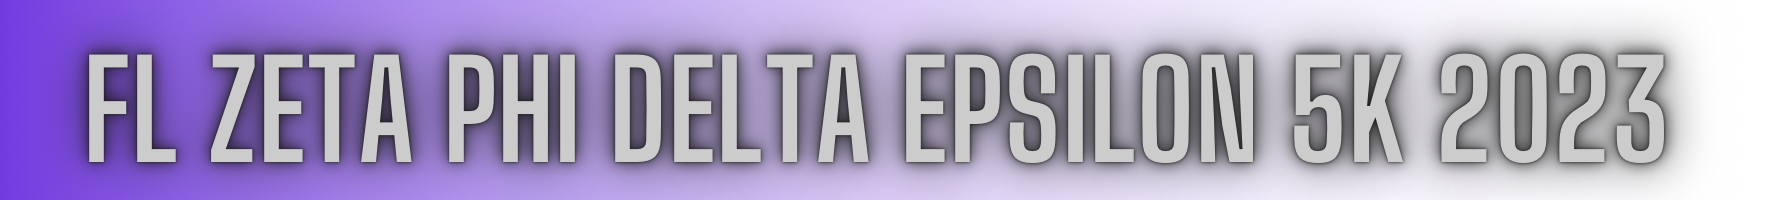 Purple gradient background with the words "FL Zeta Phi Delta Epsilon 5k 2023"